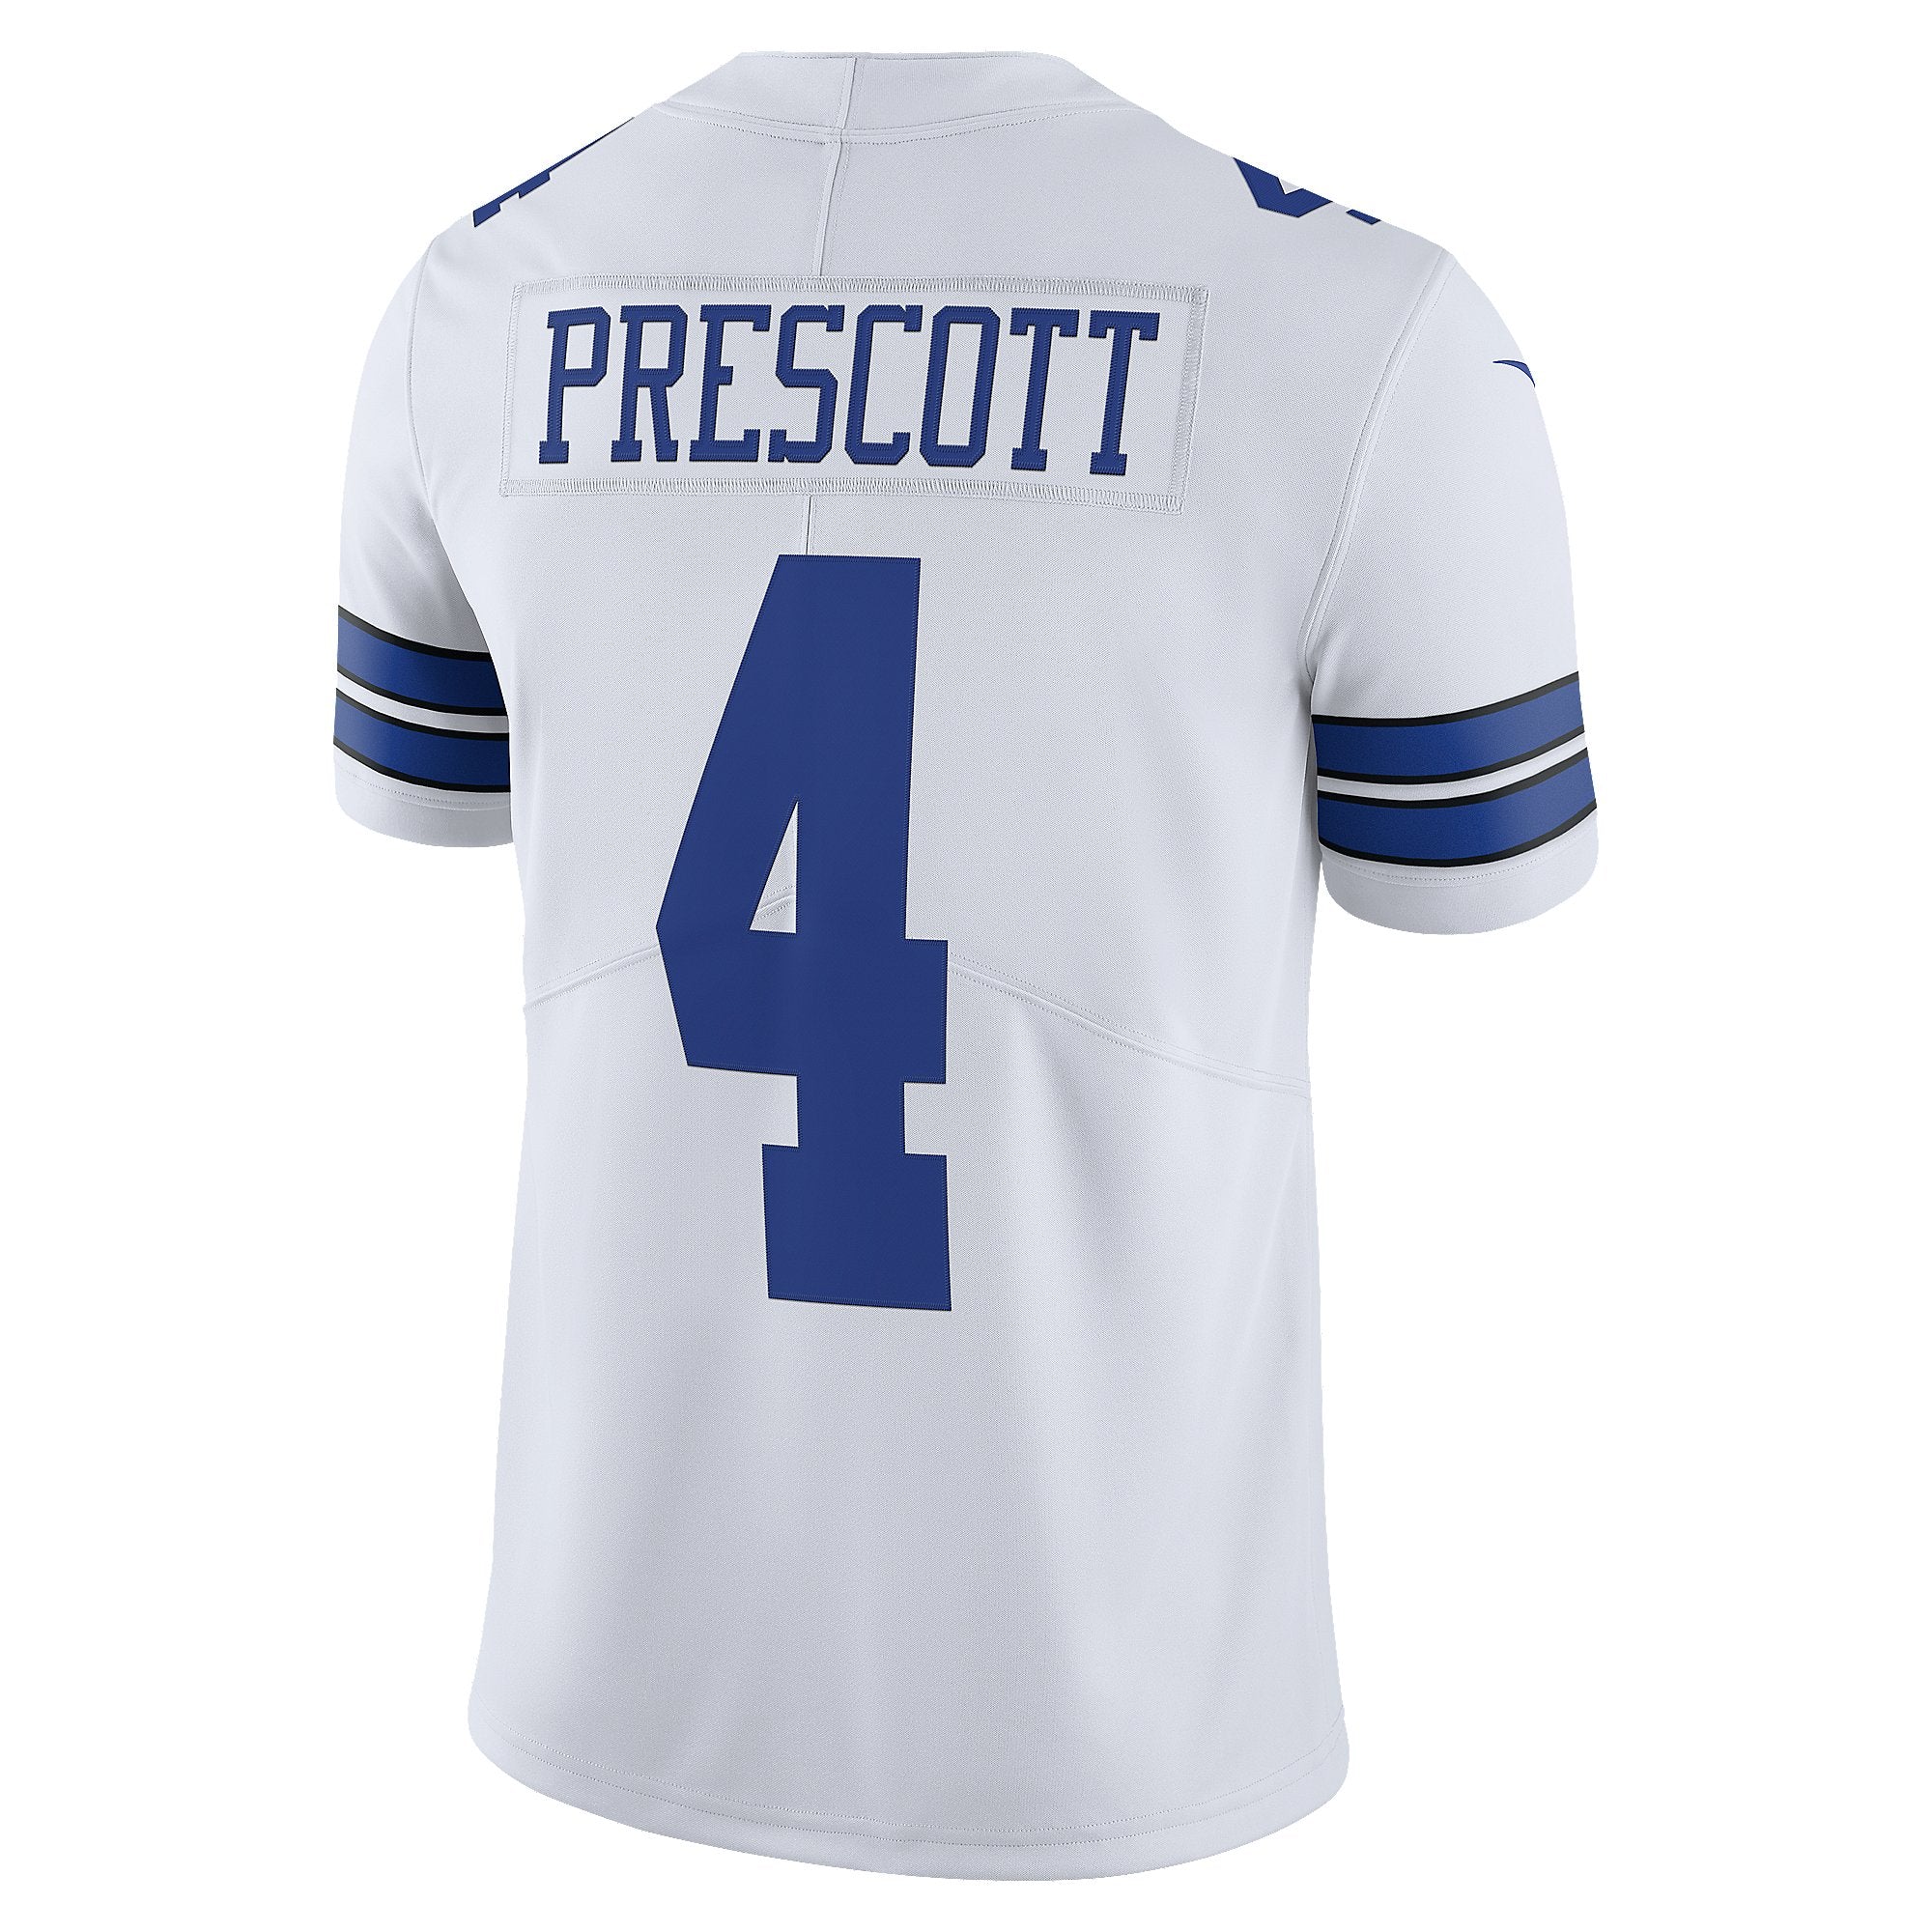 New Men's Dallas Cowboys Dak Prescott #4 Nike Game Jersey